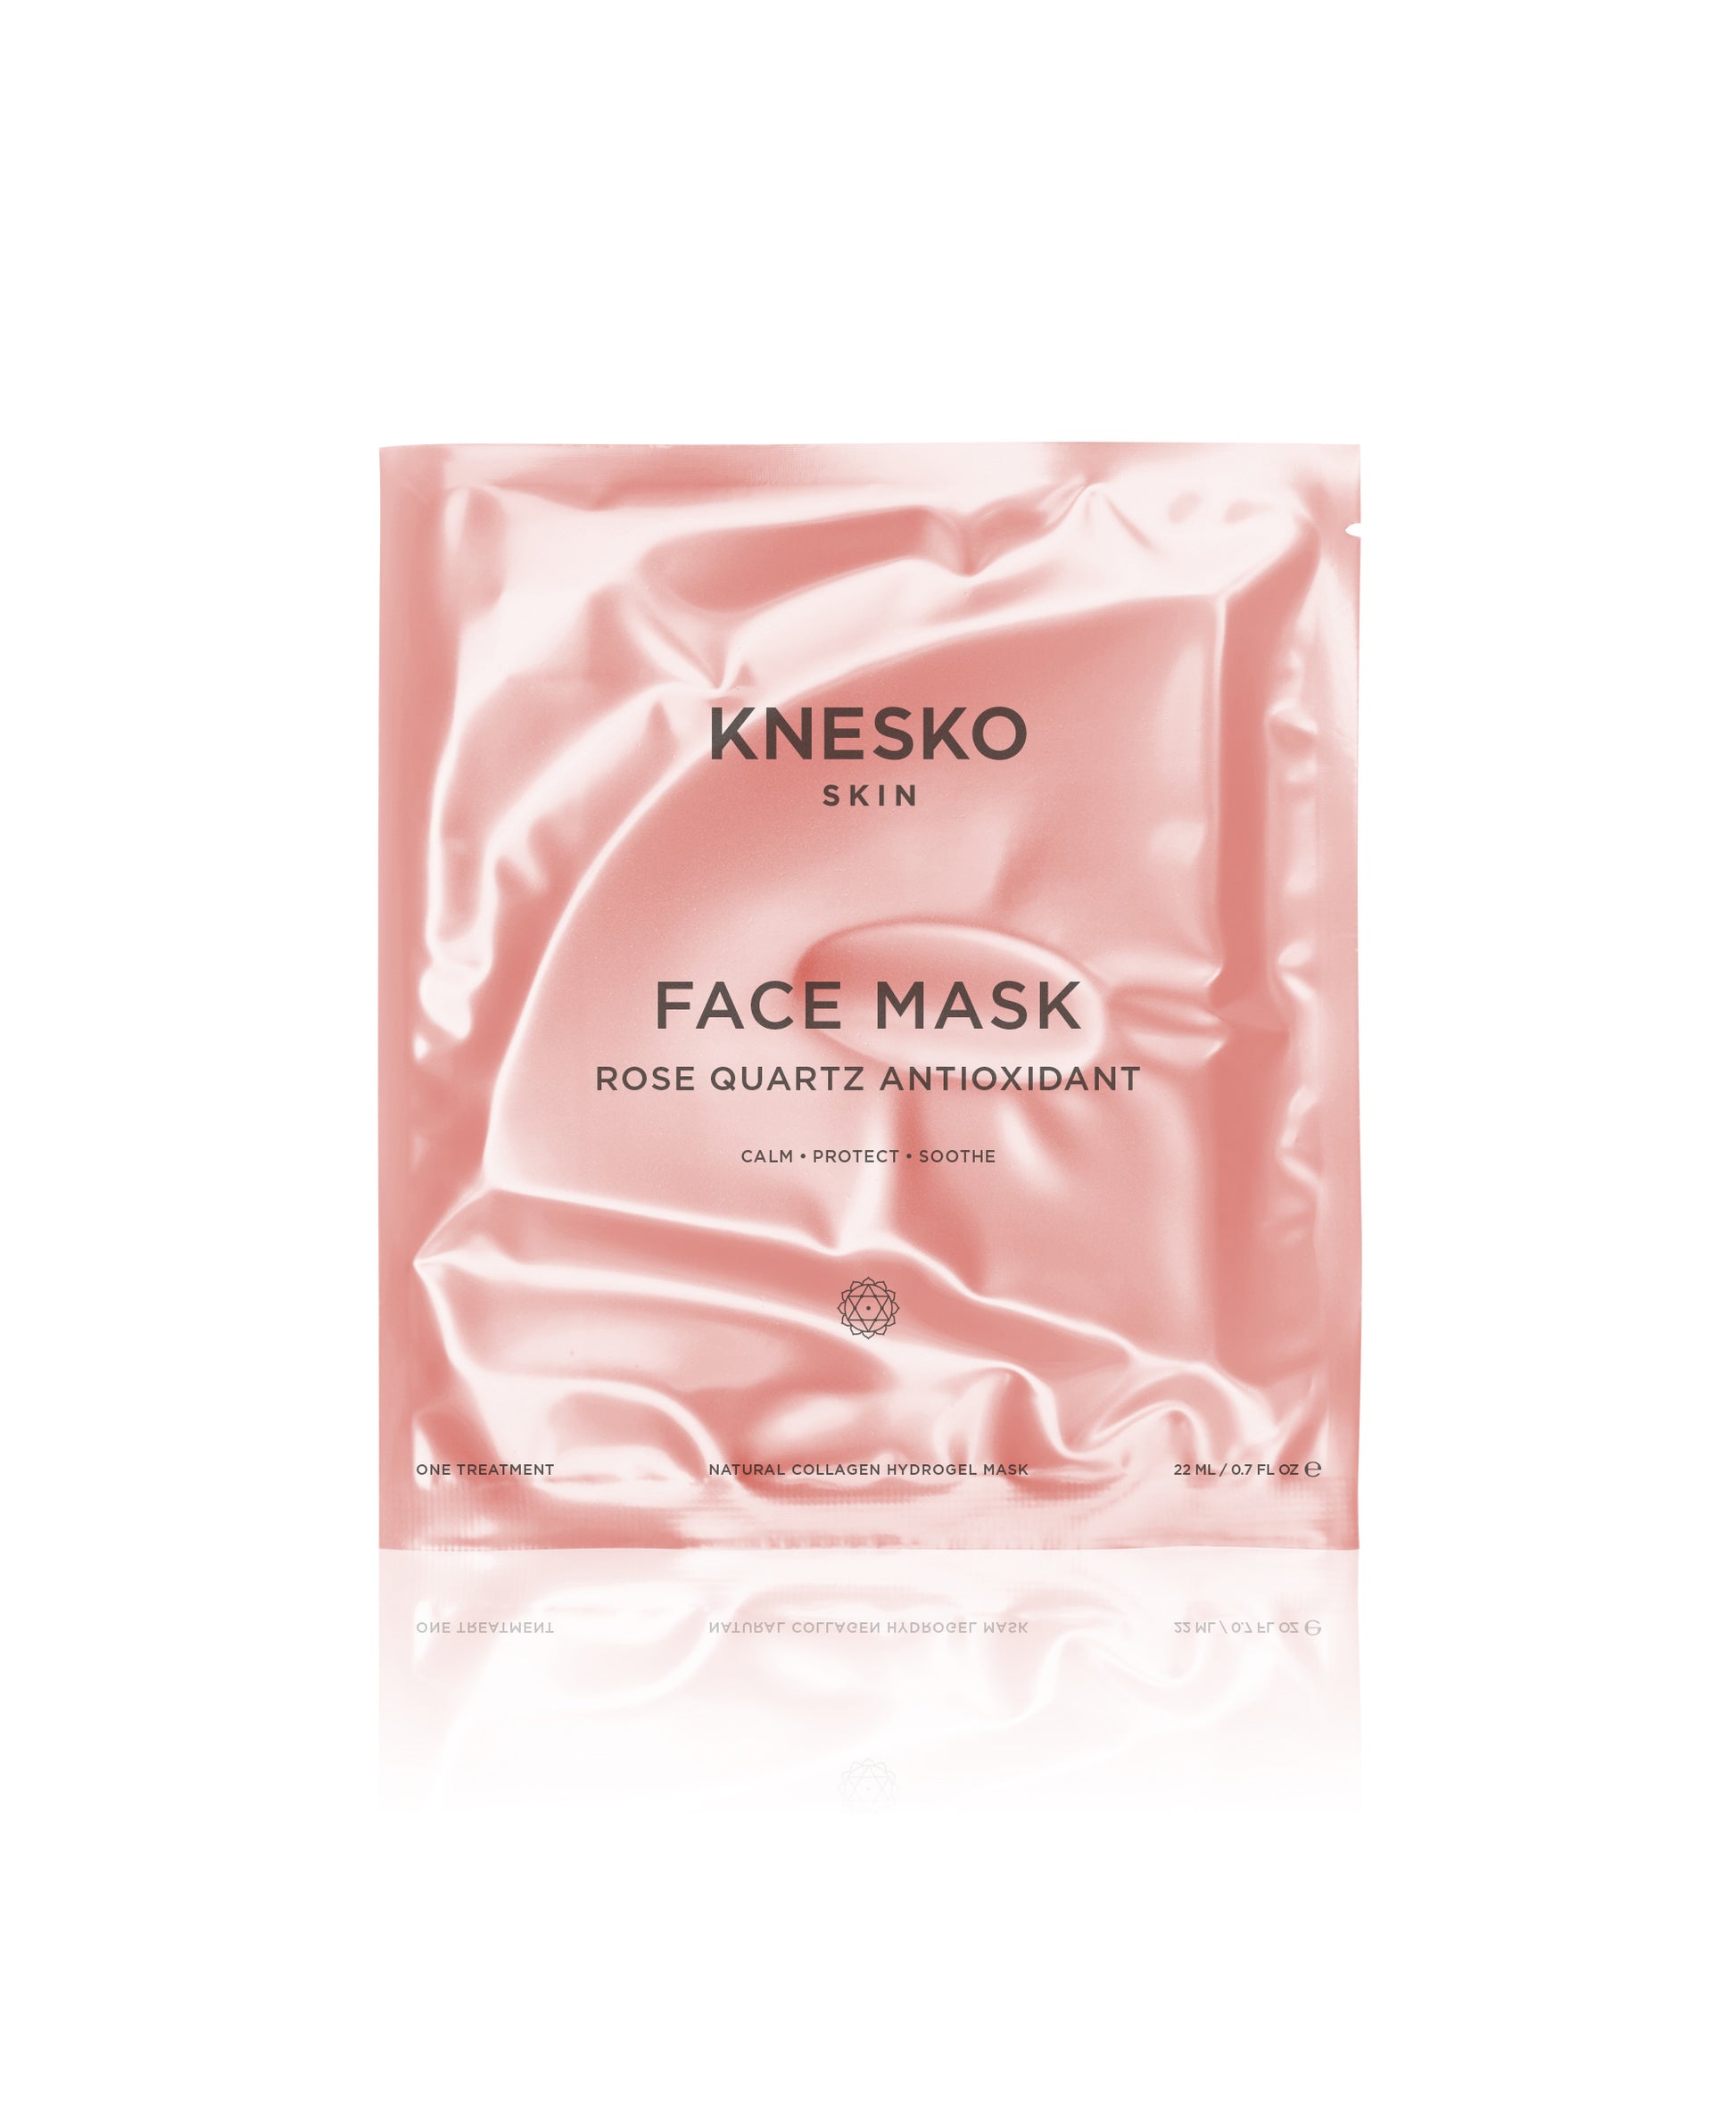 Rose Quartz Antioxidant Face Mask packaging.